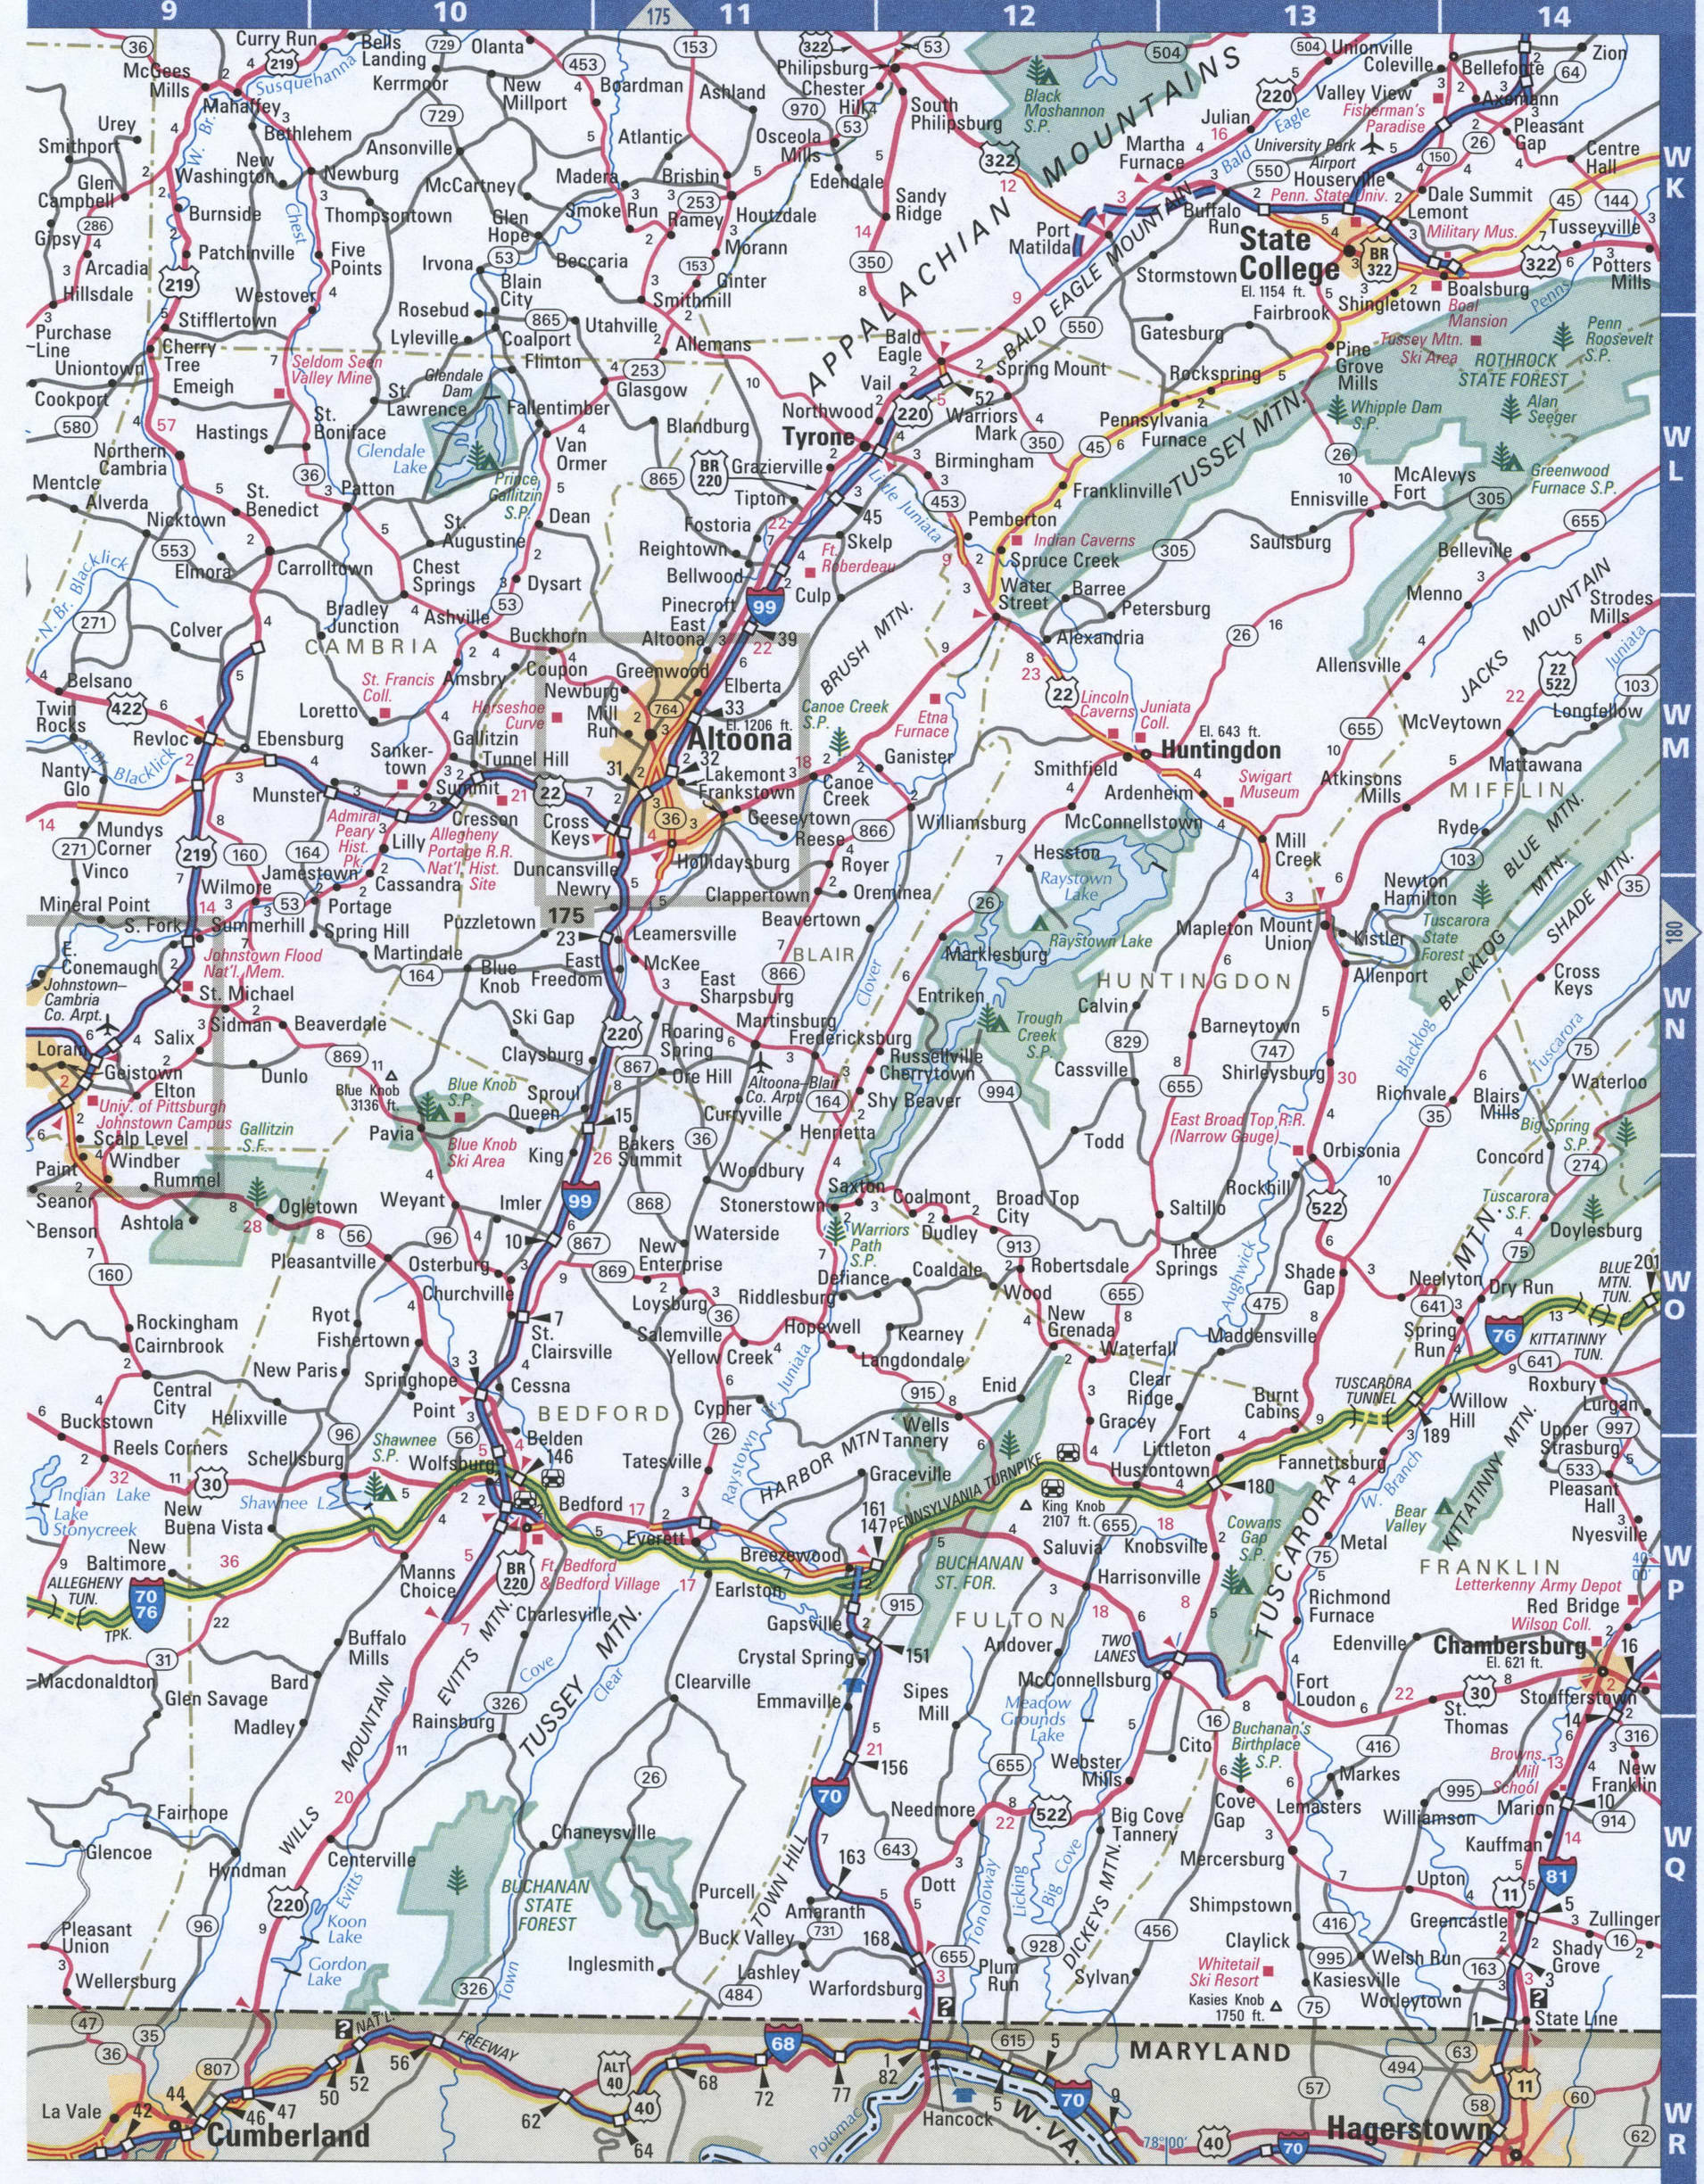 Pennsylvania SouthWest map